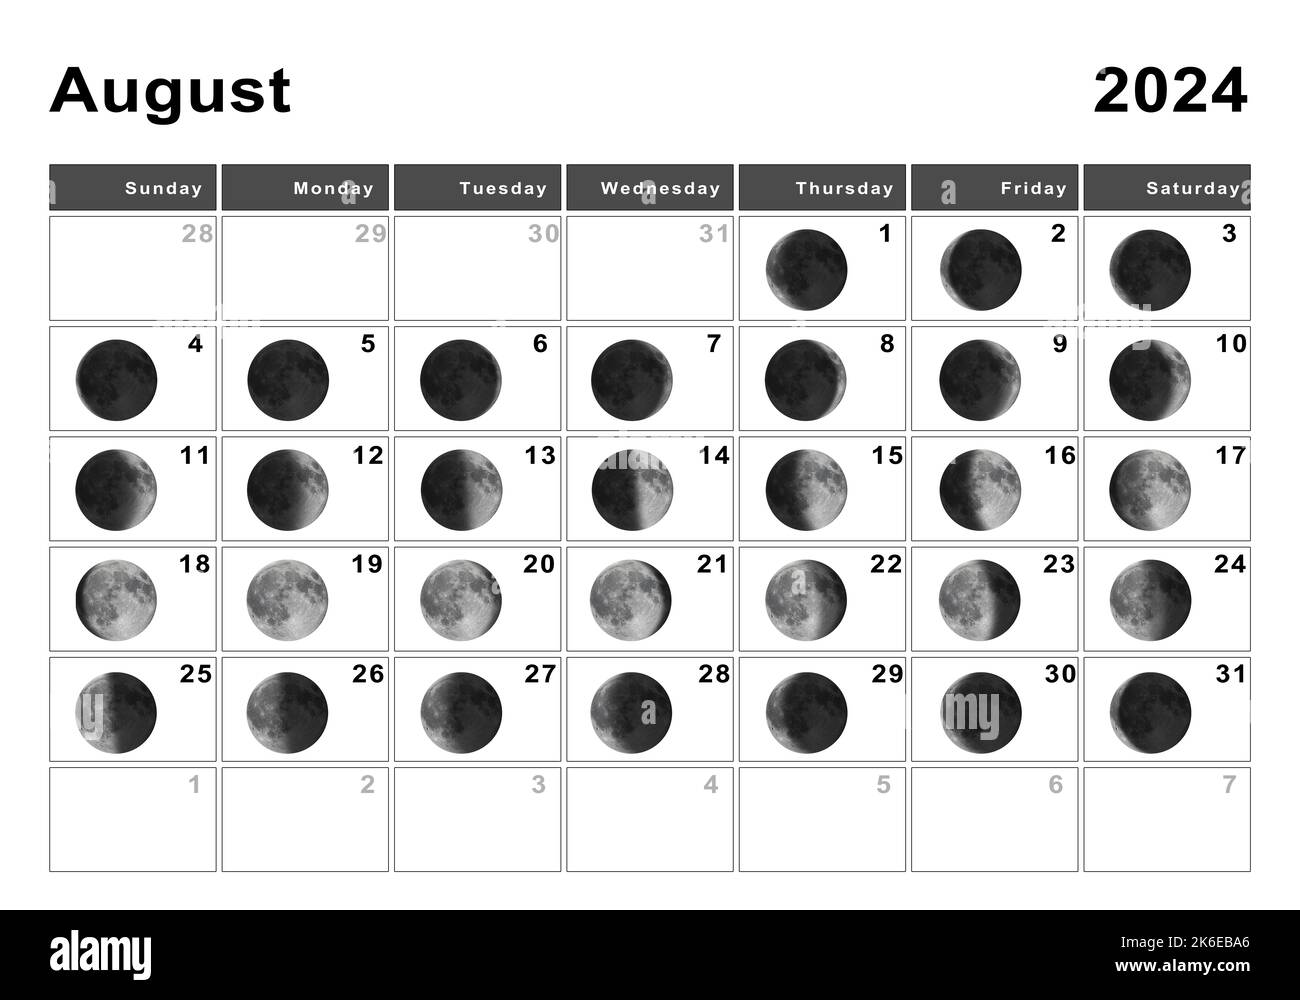 August 2024 Lunar calendar, Moon cycles, Moon Phases Stock Photo Alamy